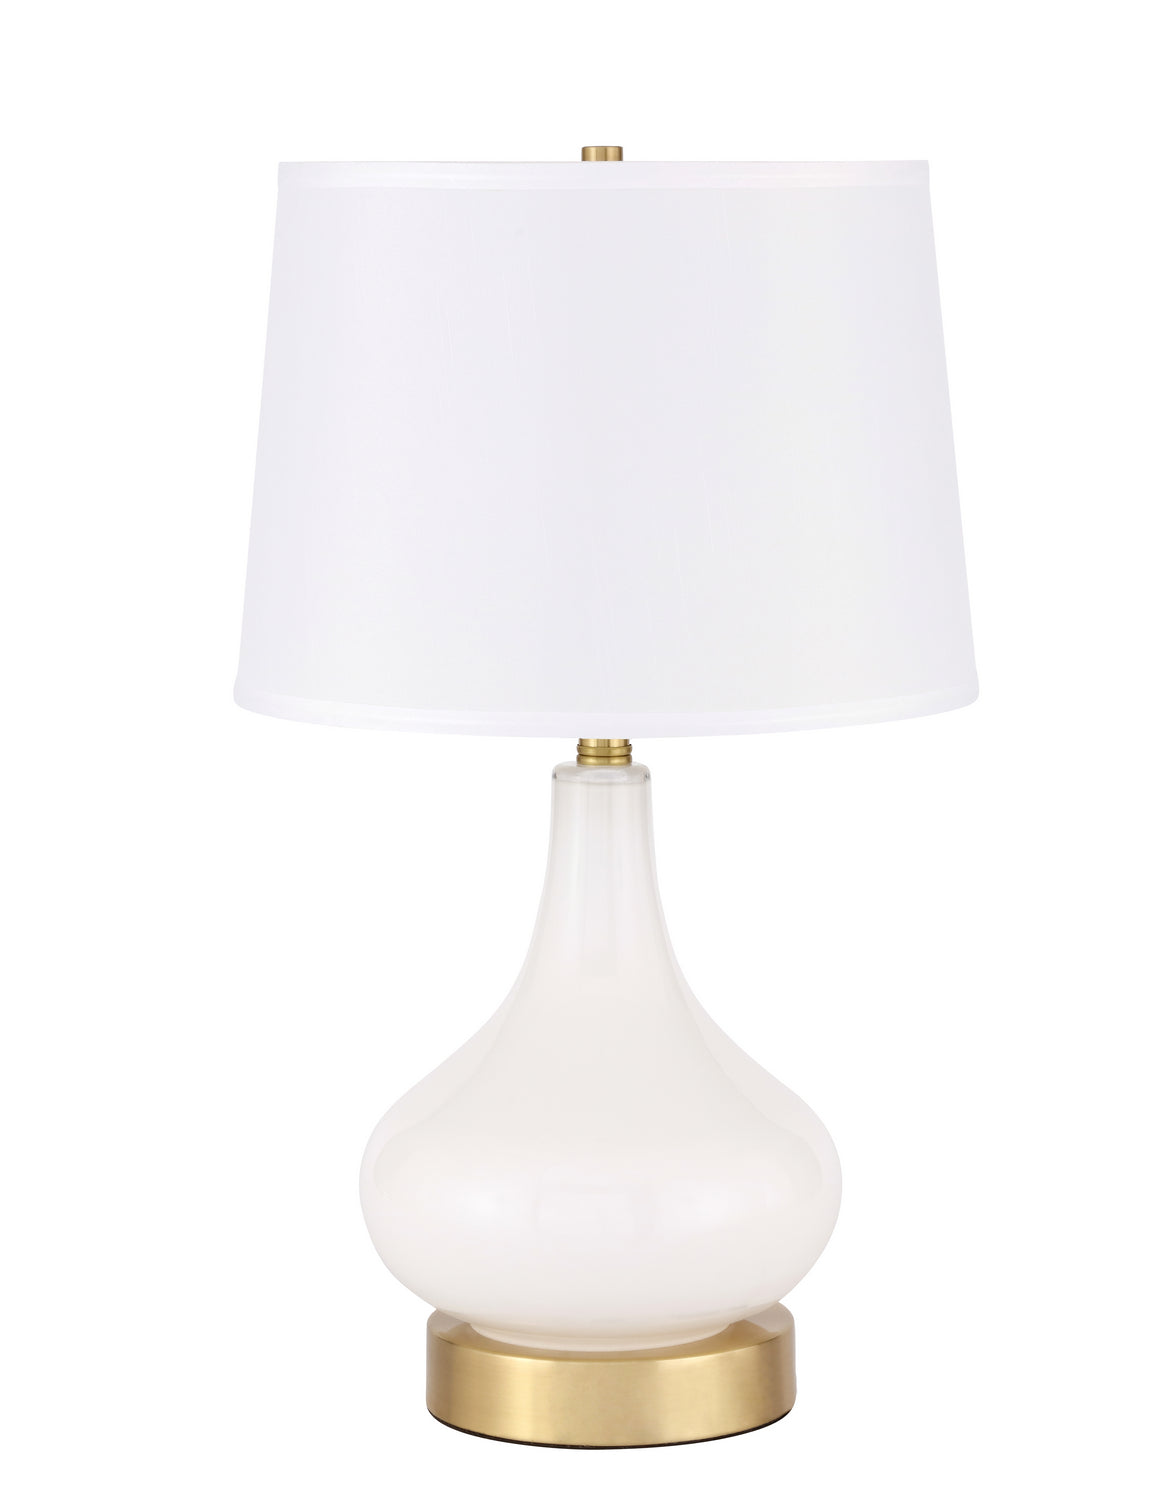 Elegant Lighting - TL3035BR - One Light Table Lamp - Alix - Brushed Brass And White